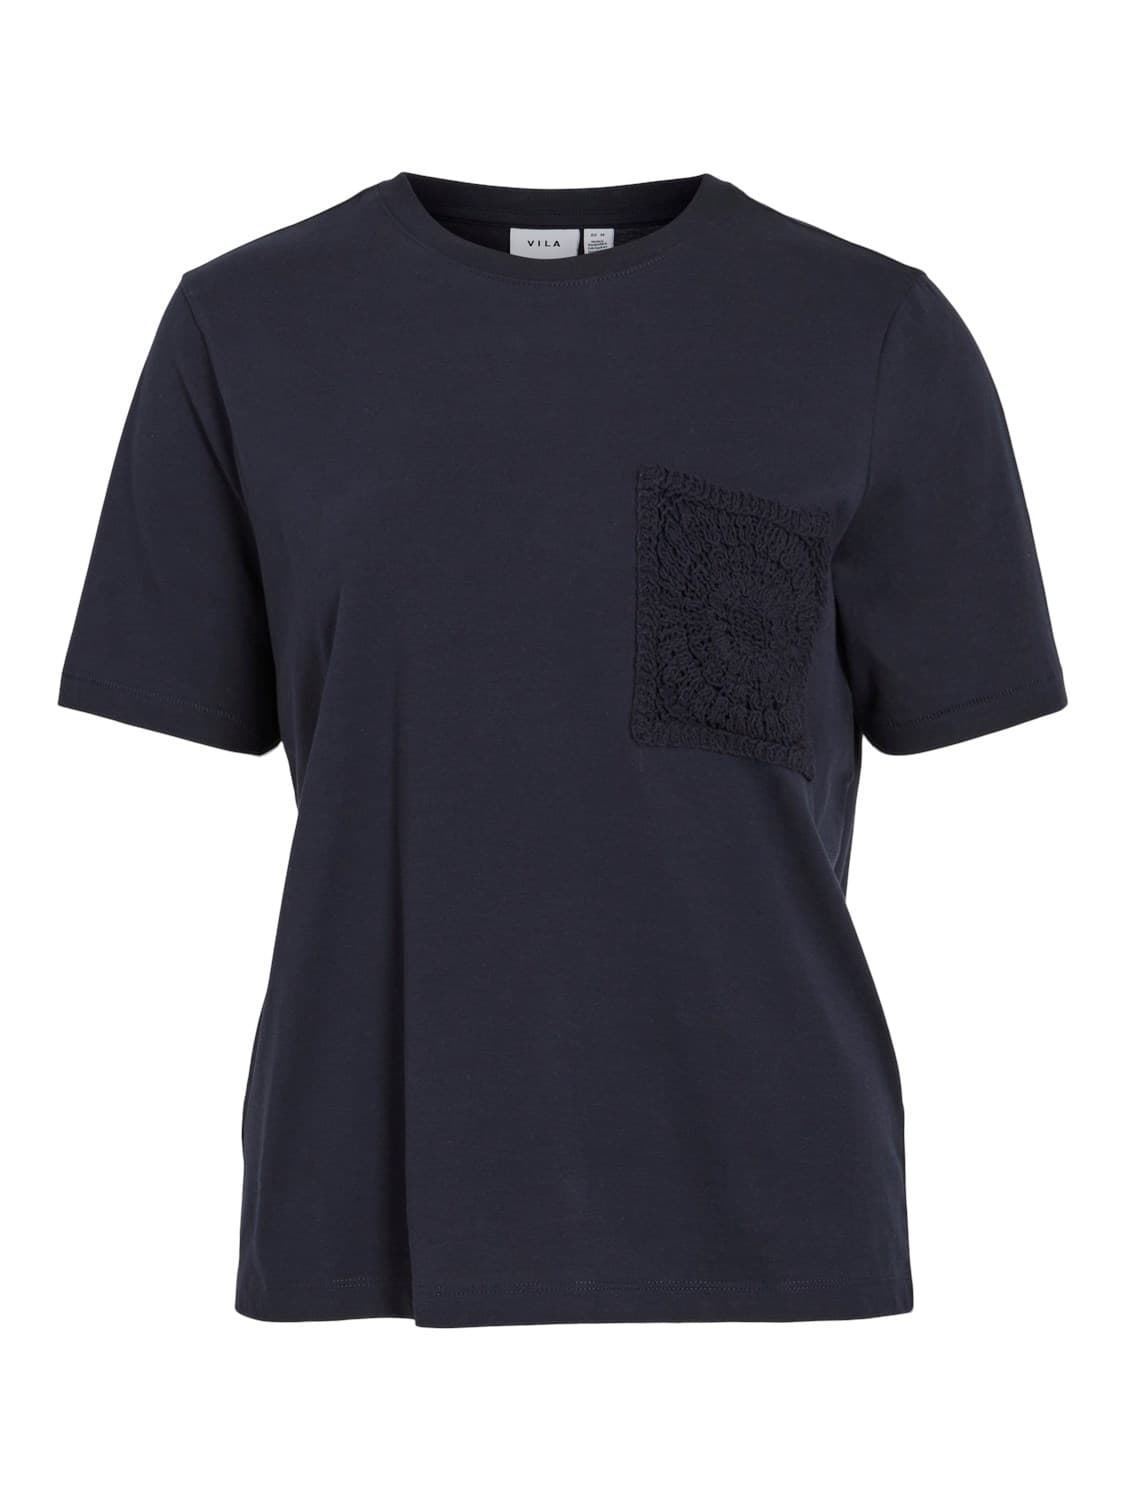 Camiseta crochet visybil marino - Imagen 4